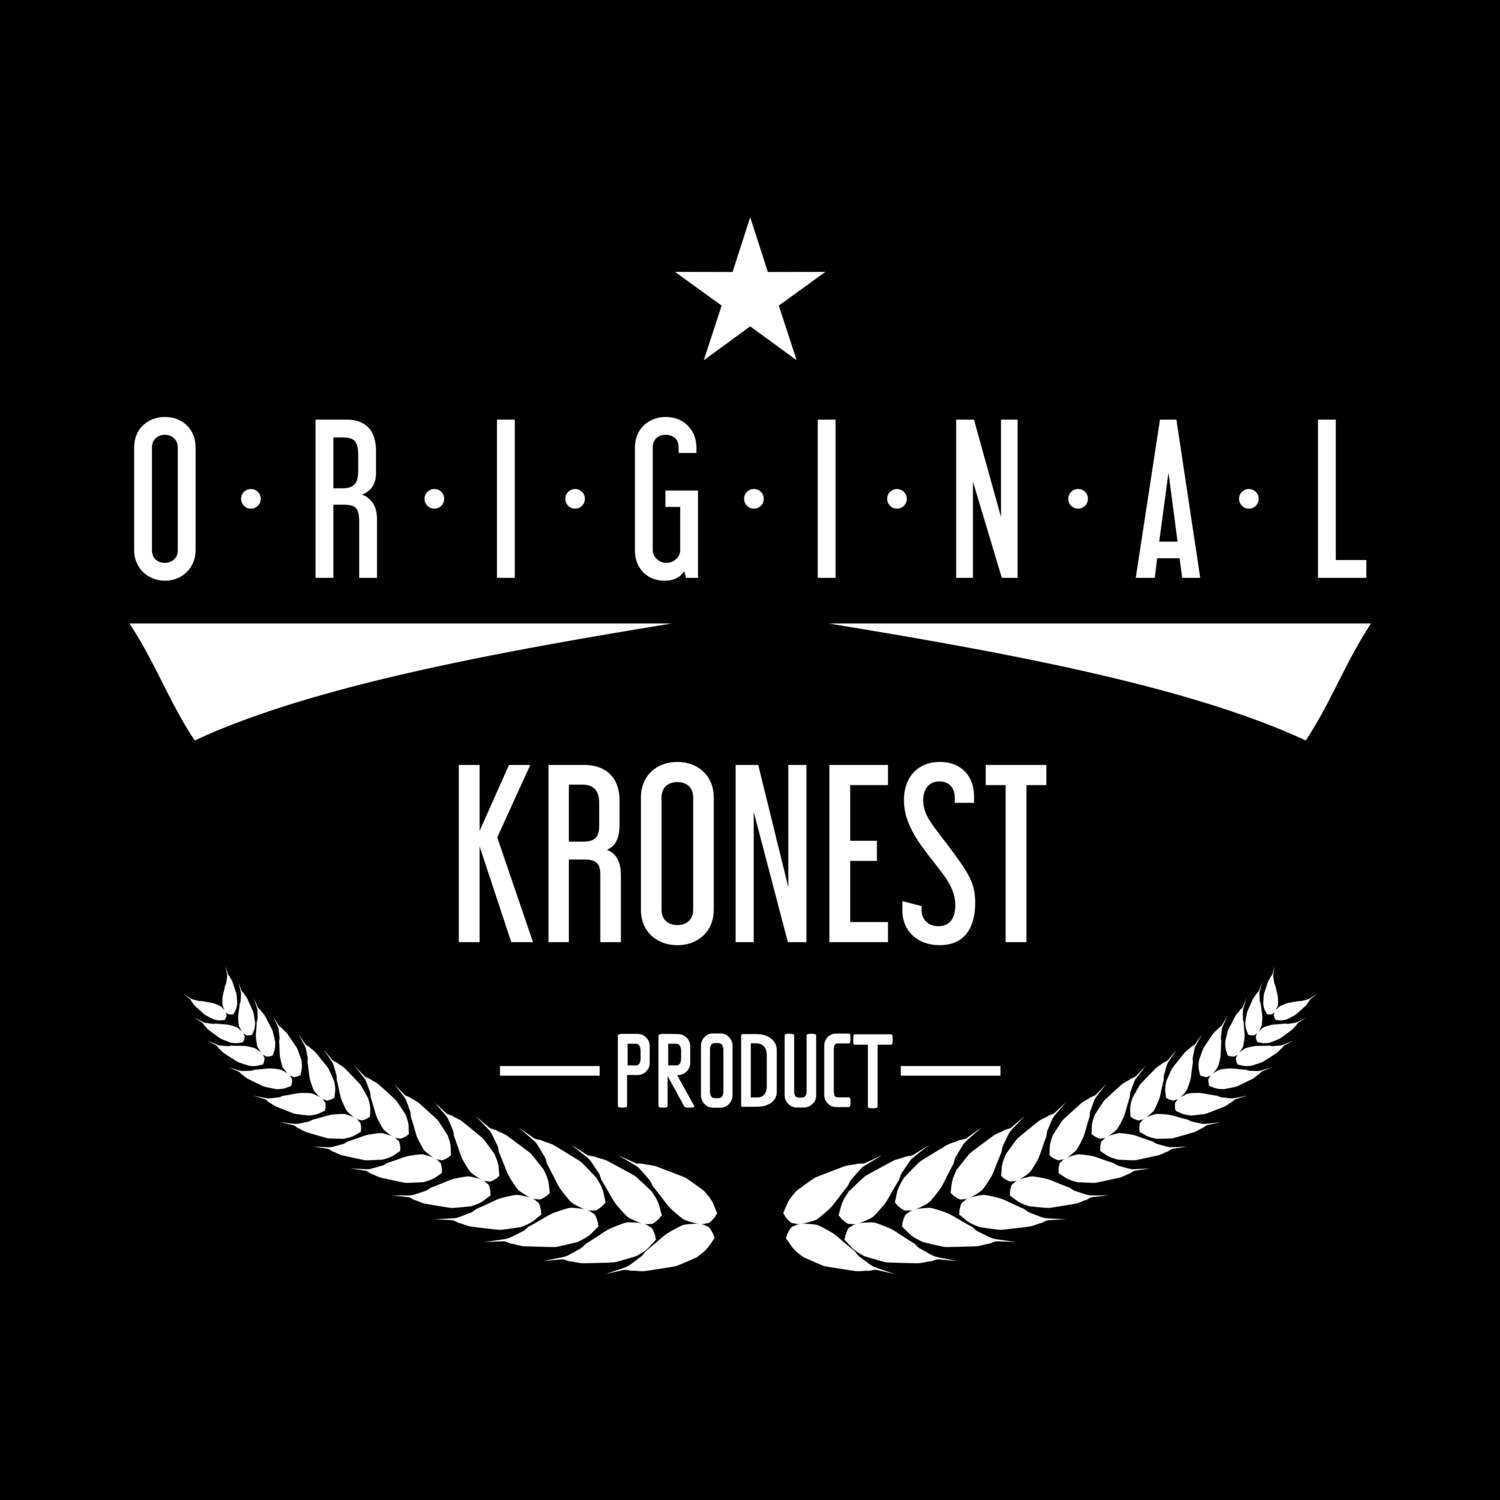 Kronest T-Shirt »Original Product«